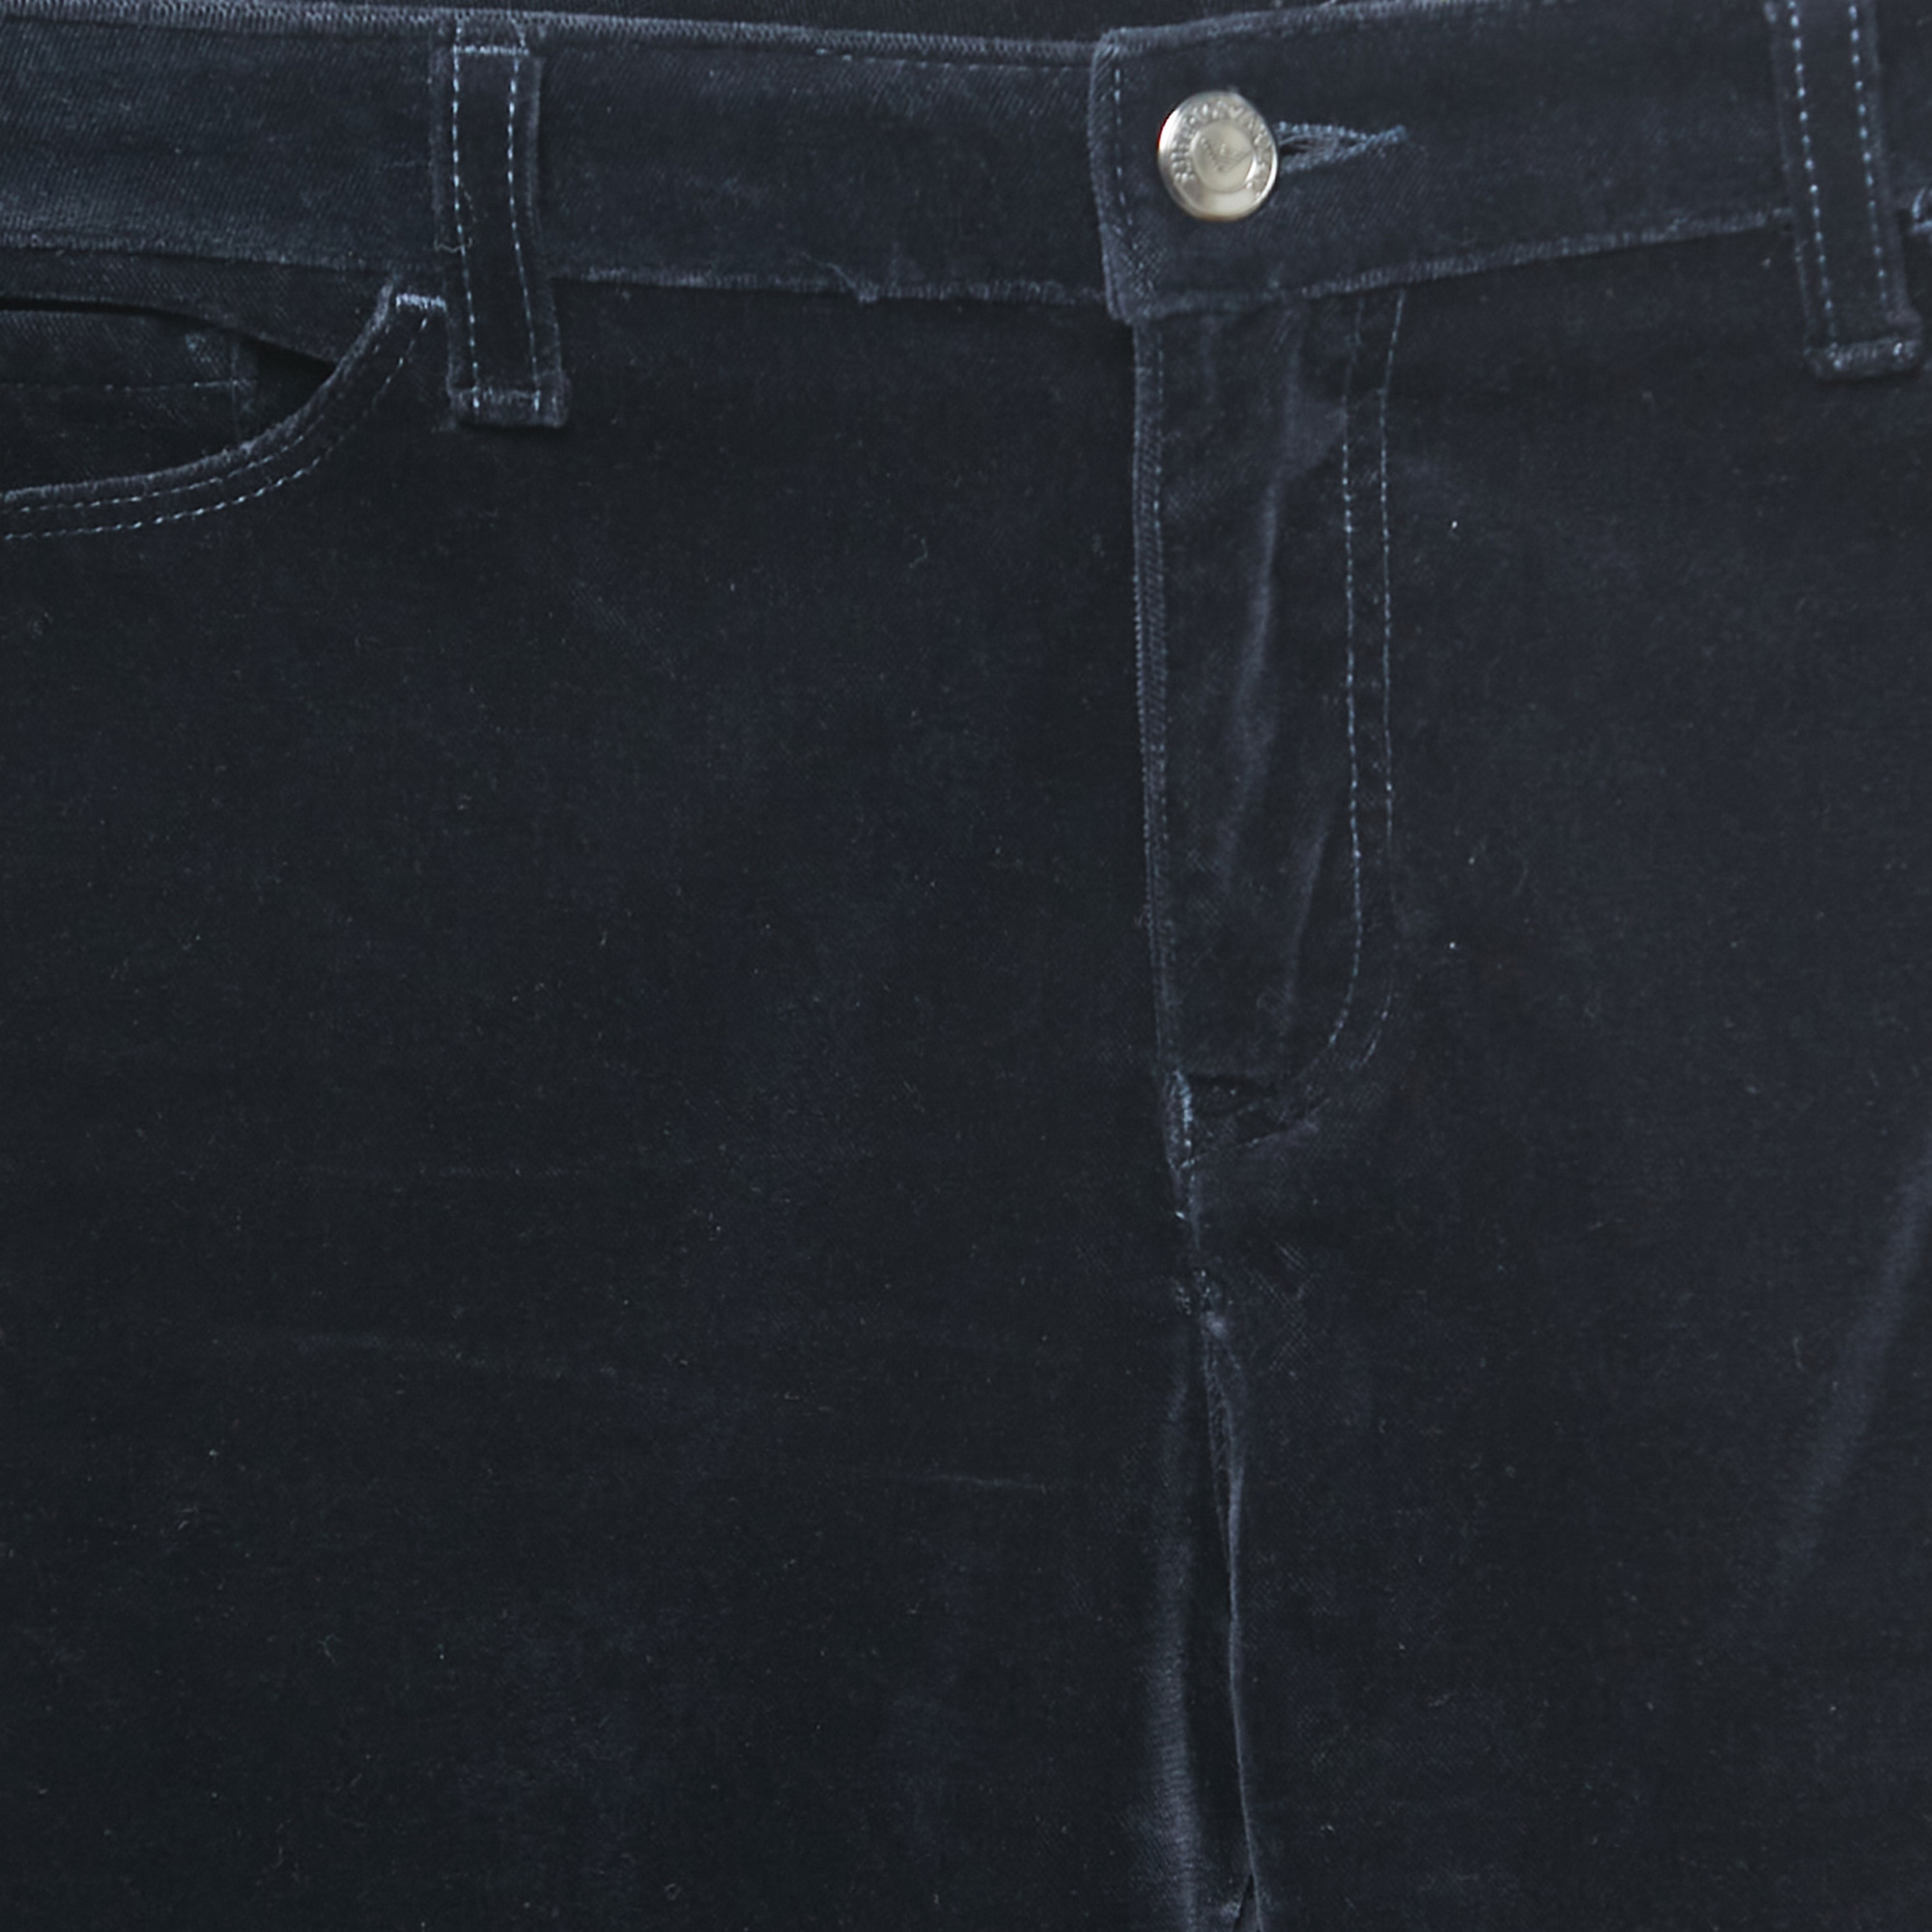 Emporio Armani Navy Blue Velvet Jeans S Waist 26